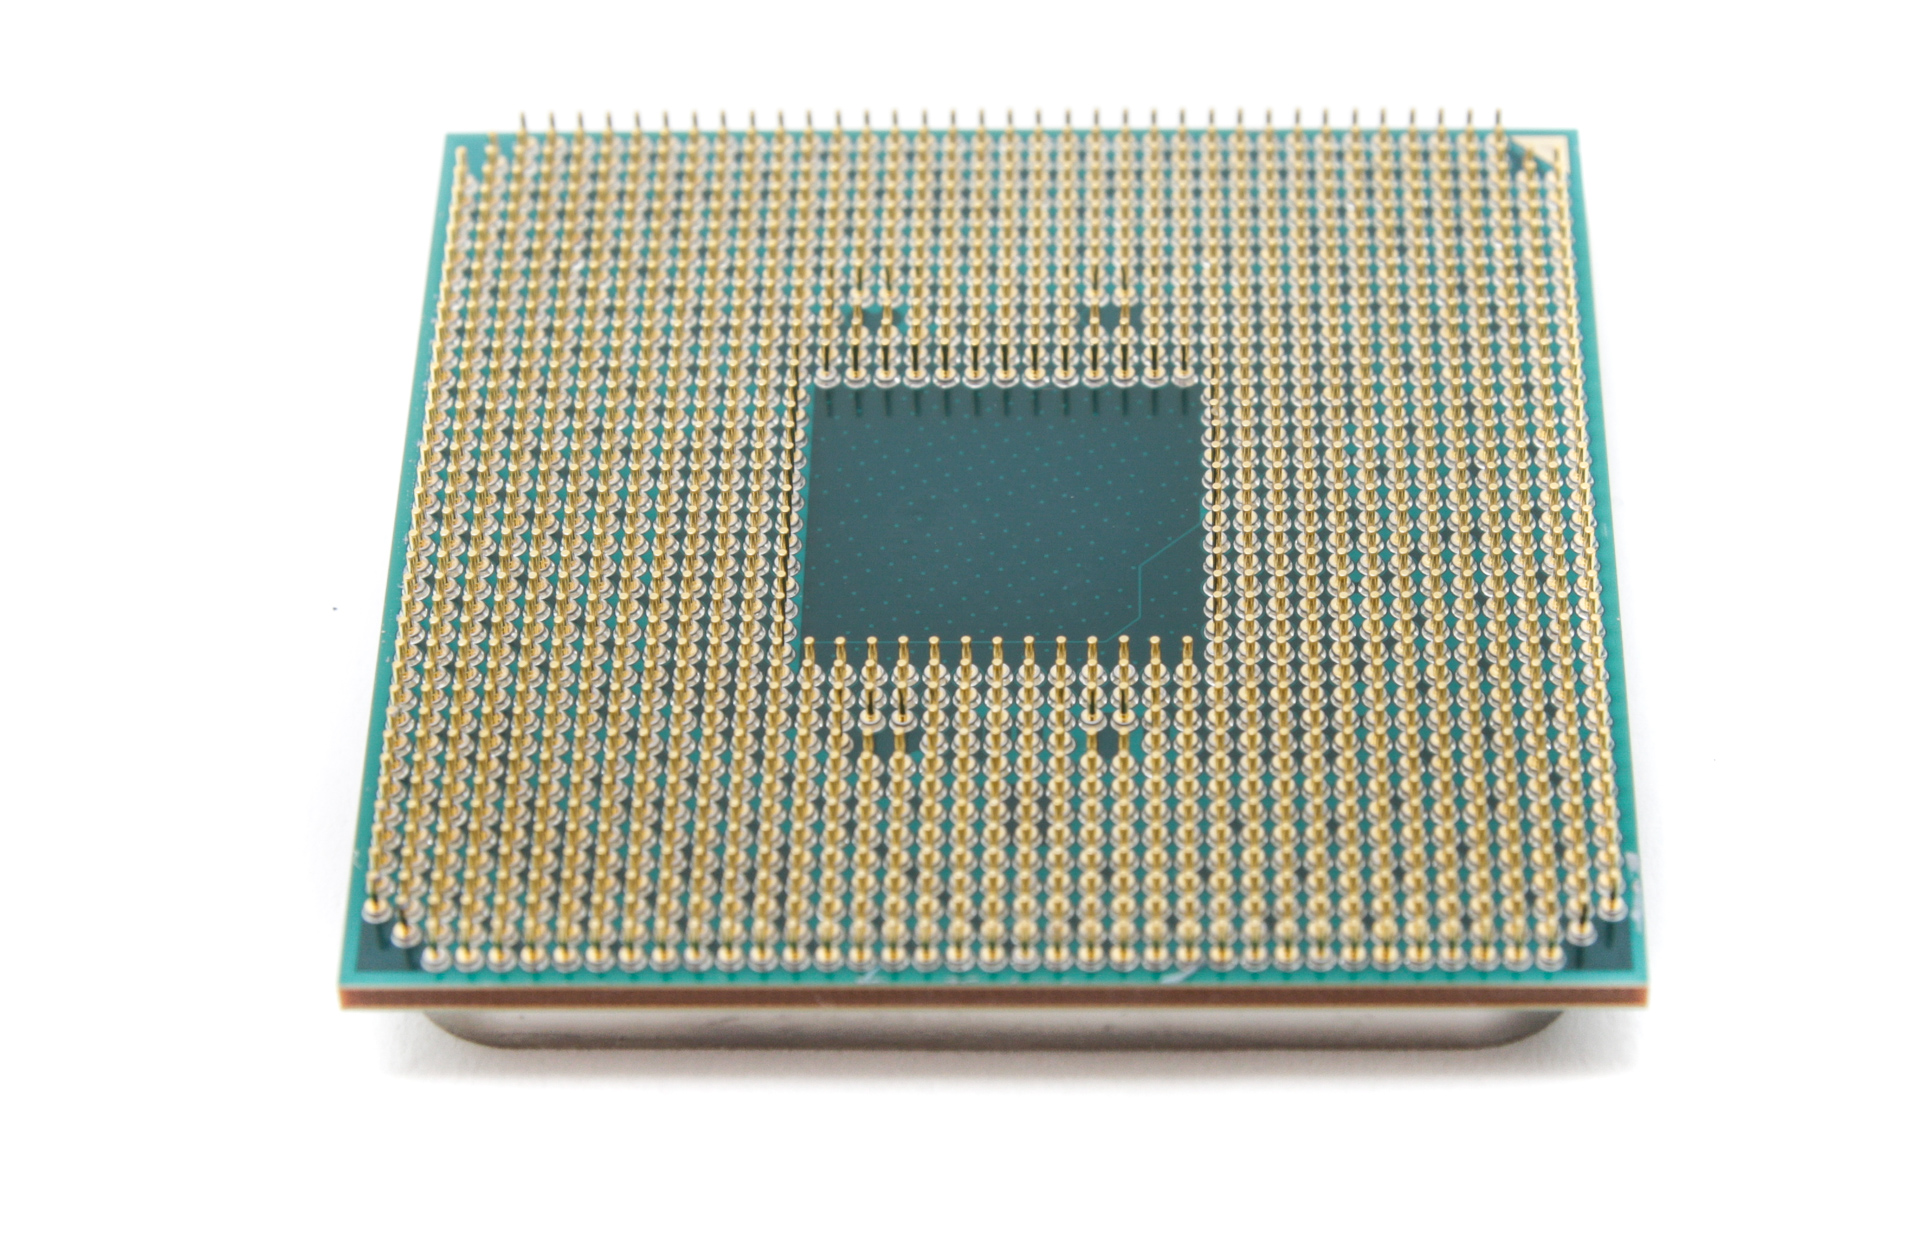 Cpu 16 cores. AMD Zen 2 процессоры. Процессор: TBA. Eight Core CPU. Как заказать плату AMD zen2.